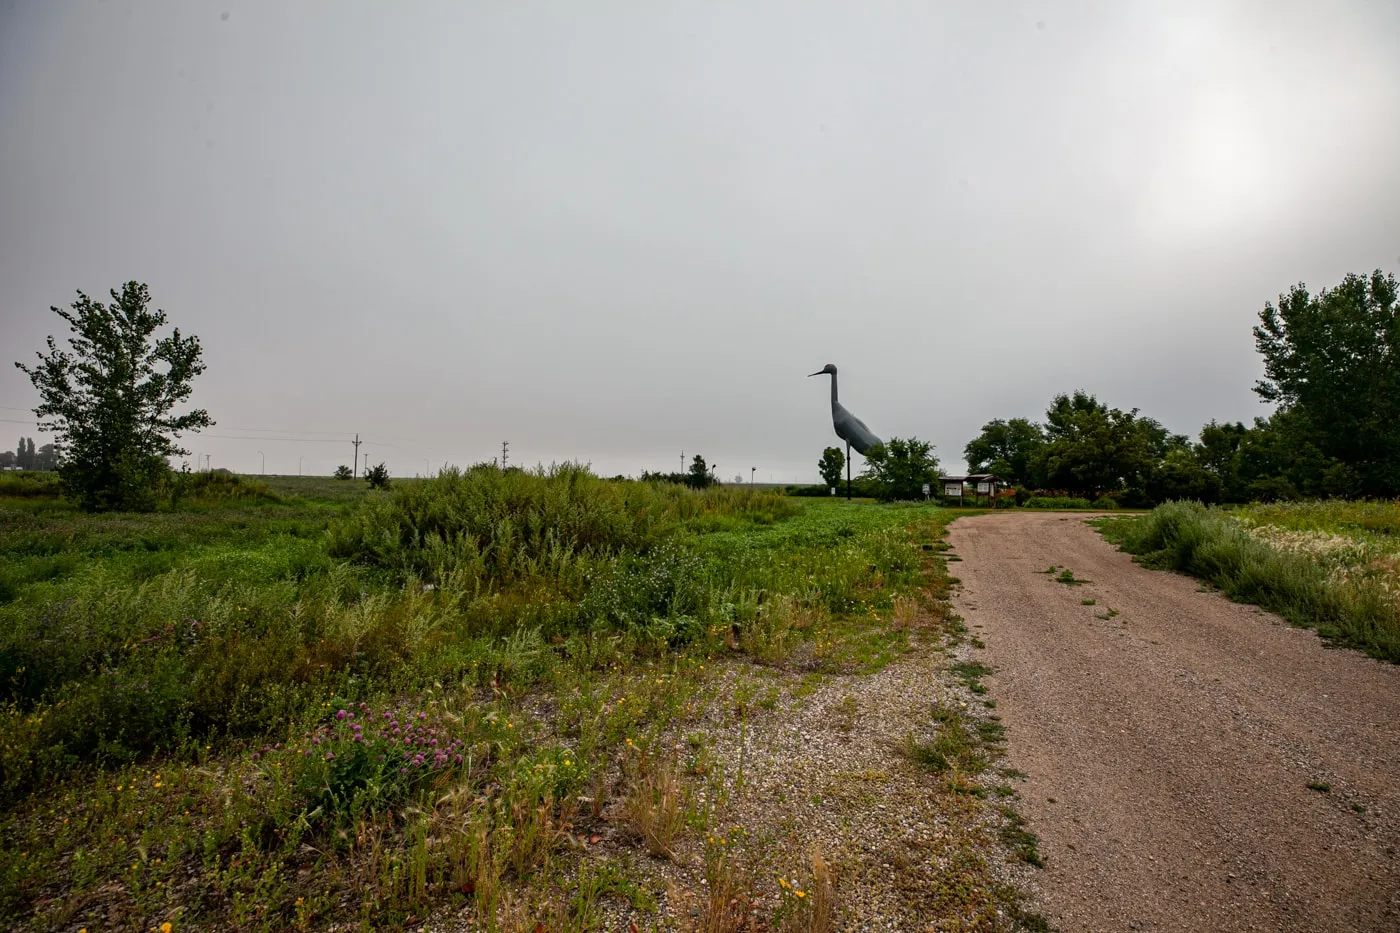 Sandy the World's Largest Sandhill Crane in Steele, North Dakota | North Dakota Roadside Attractions